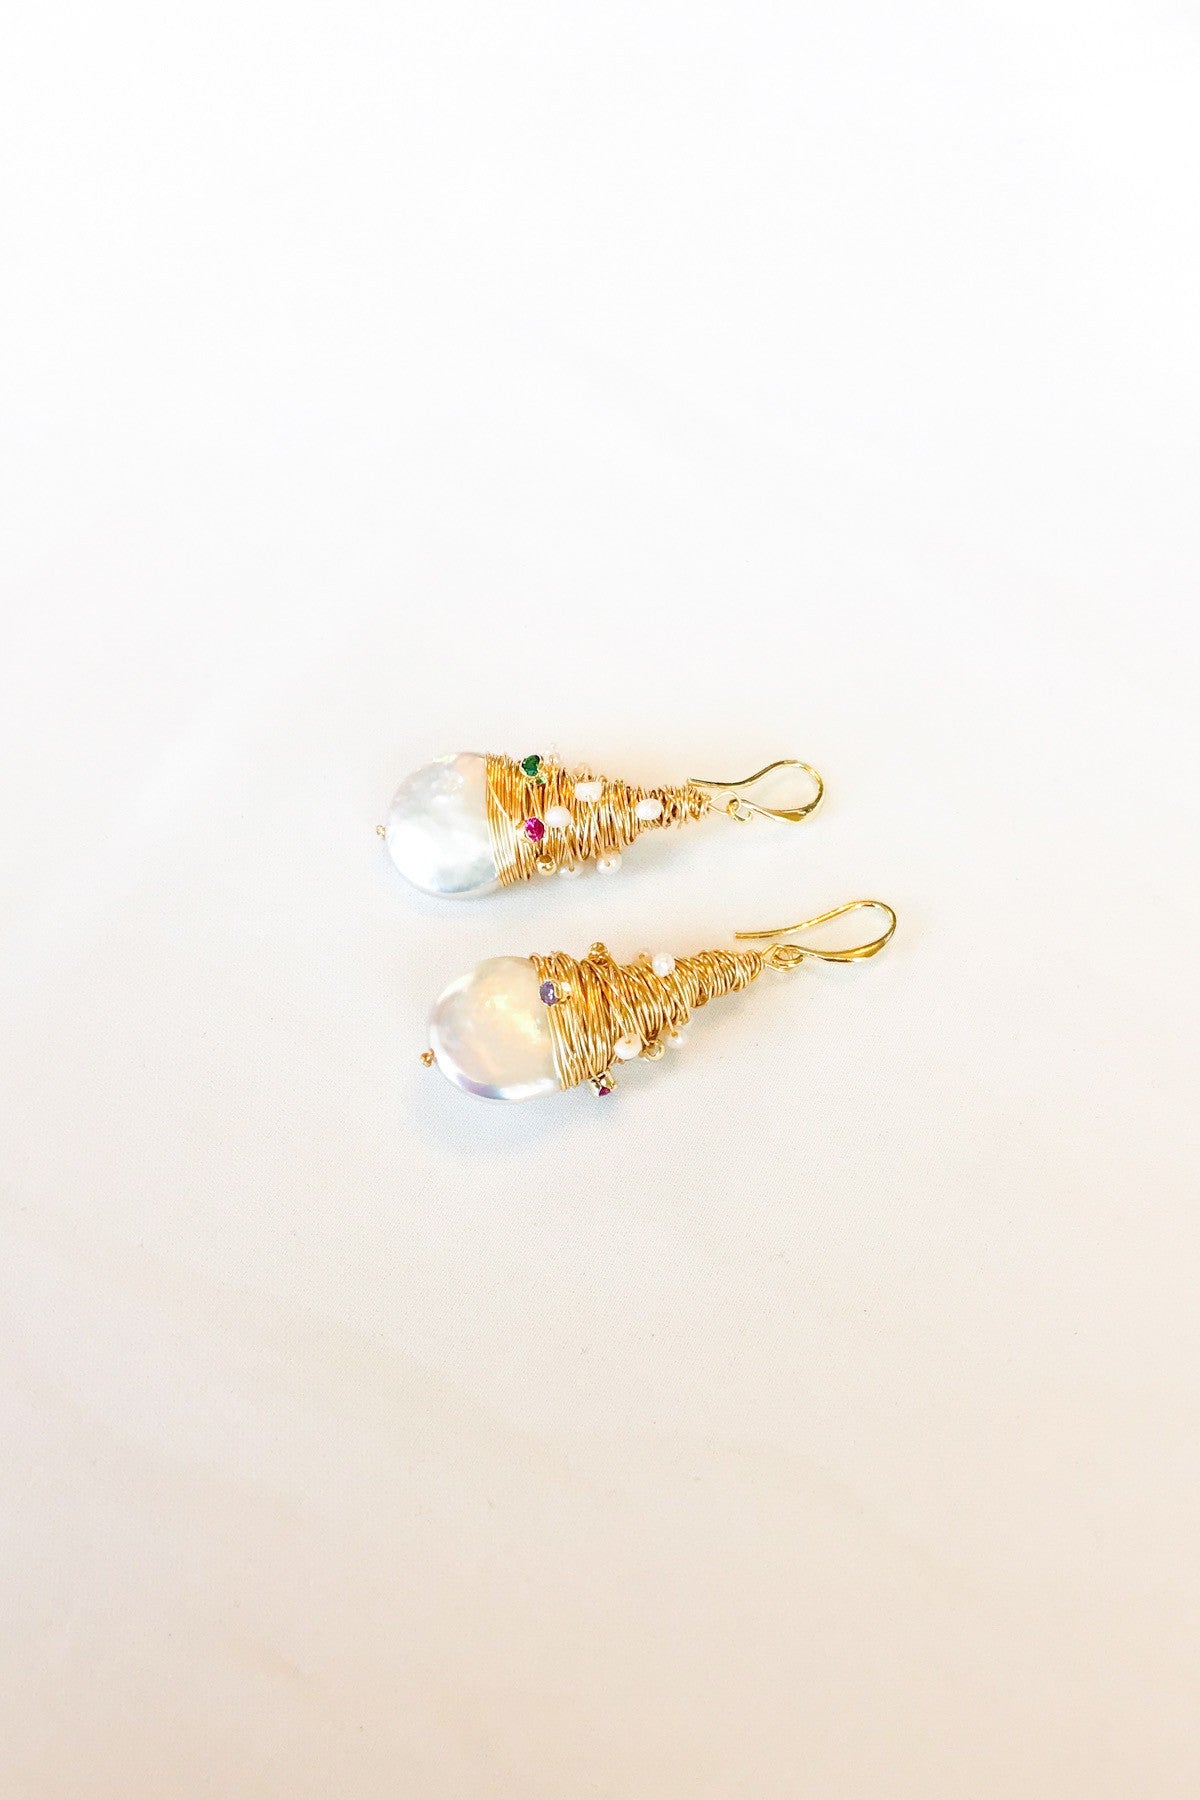 SKYE San Francisco SF shop ethical sustainable modern minimalist luxury women jewelry Spring 2020 Opale 18K Gold Freshwater Pearl Earrings 3